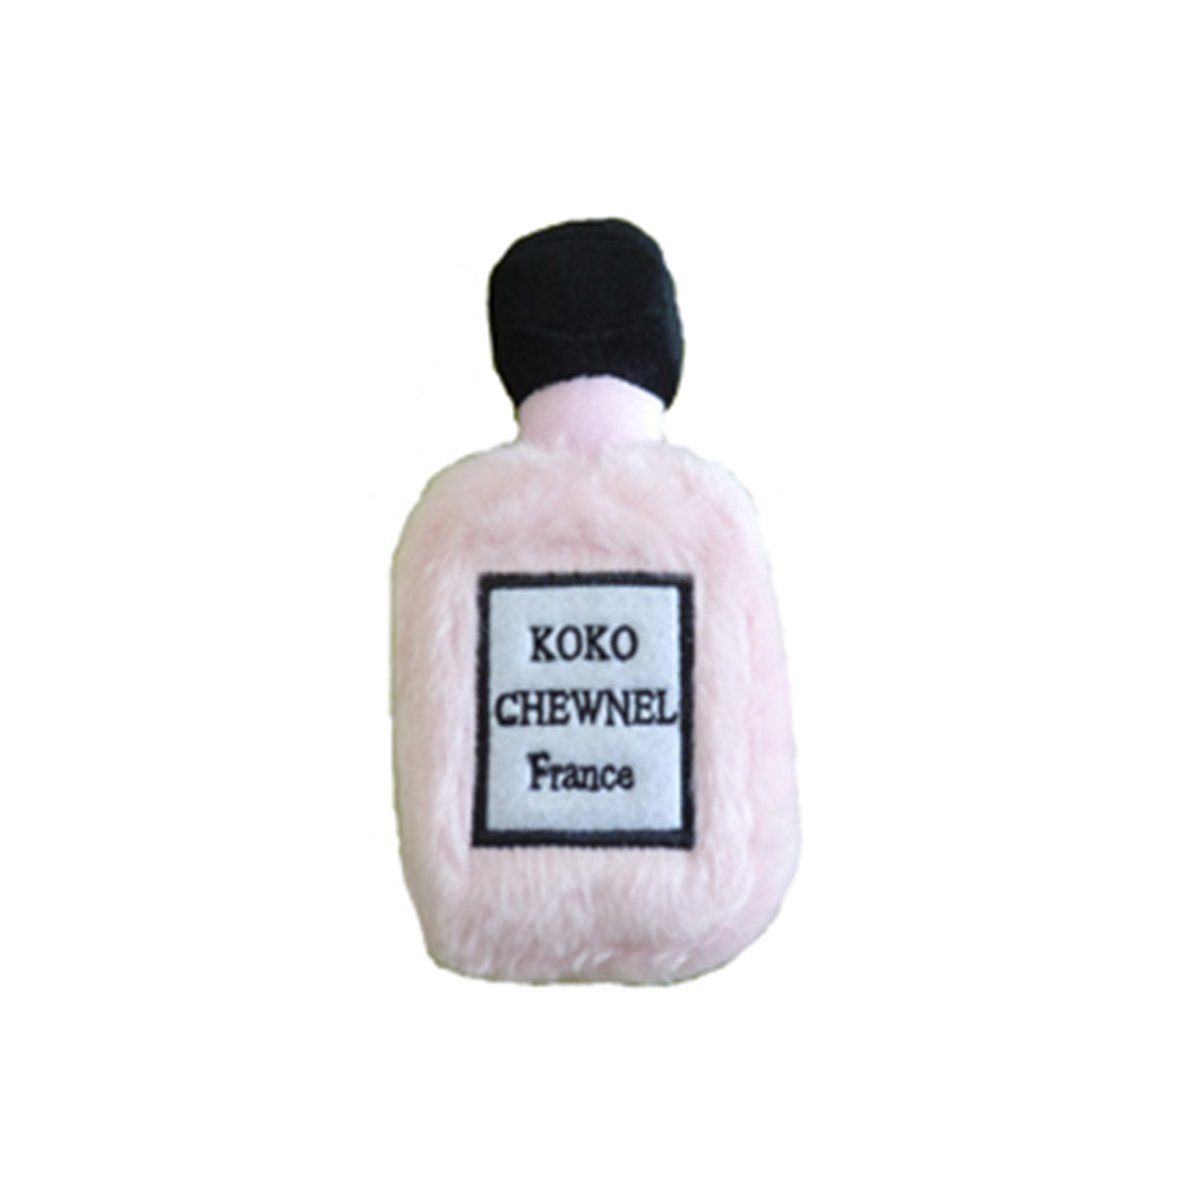 Koko Chewnel Perfume Plush Dog Toy | Pawlicious & Company